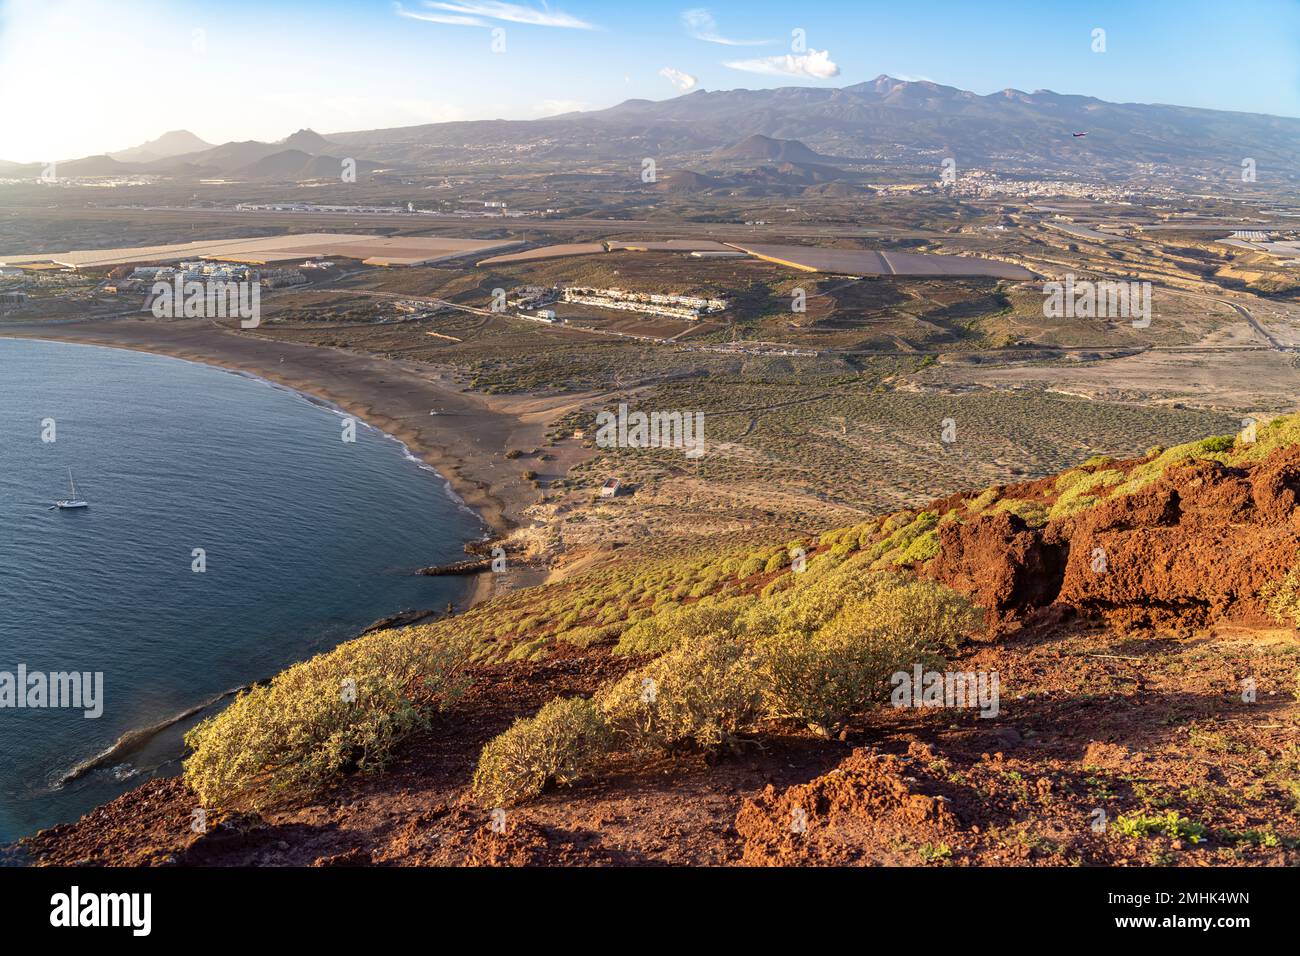 Blick vom Berg Montana Roja auf den Strand Playa la Tejita bei El Medano, Granadilla de Abona, Insel Teneriffa, Kanarische Inseln, Spanien, Europa | Foto Stock